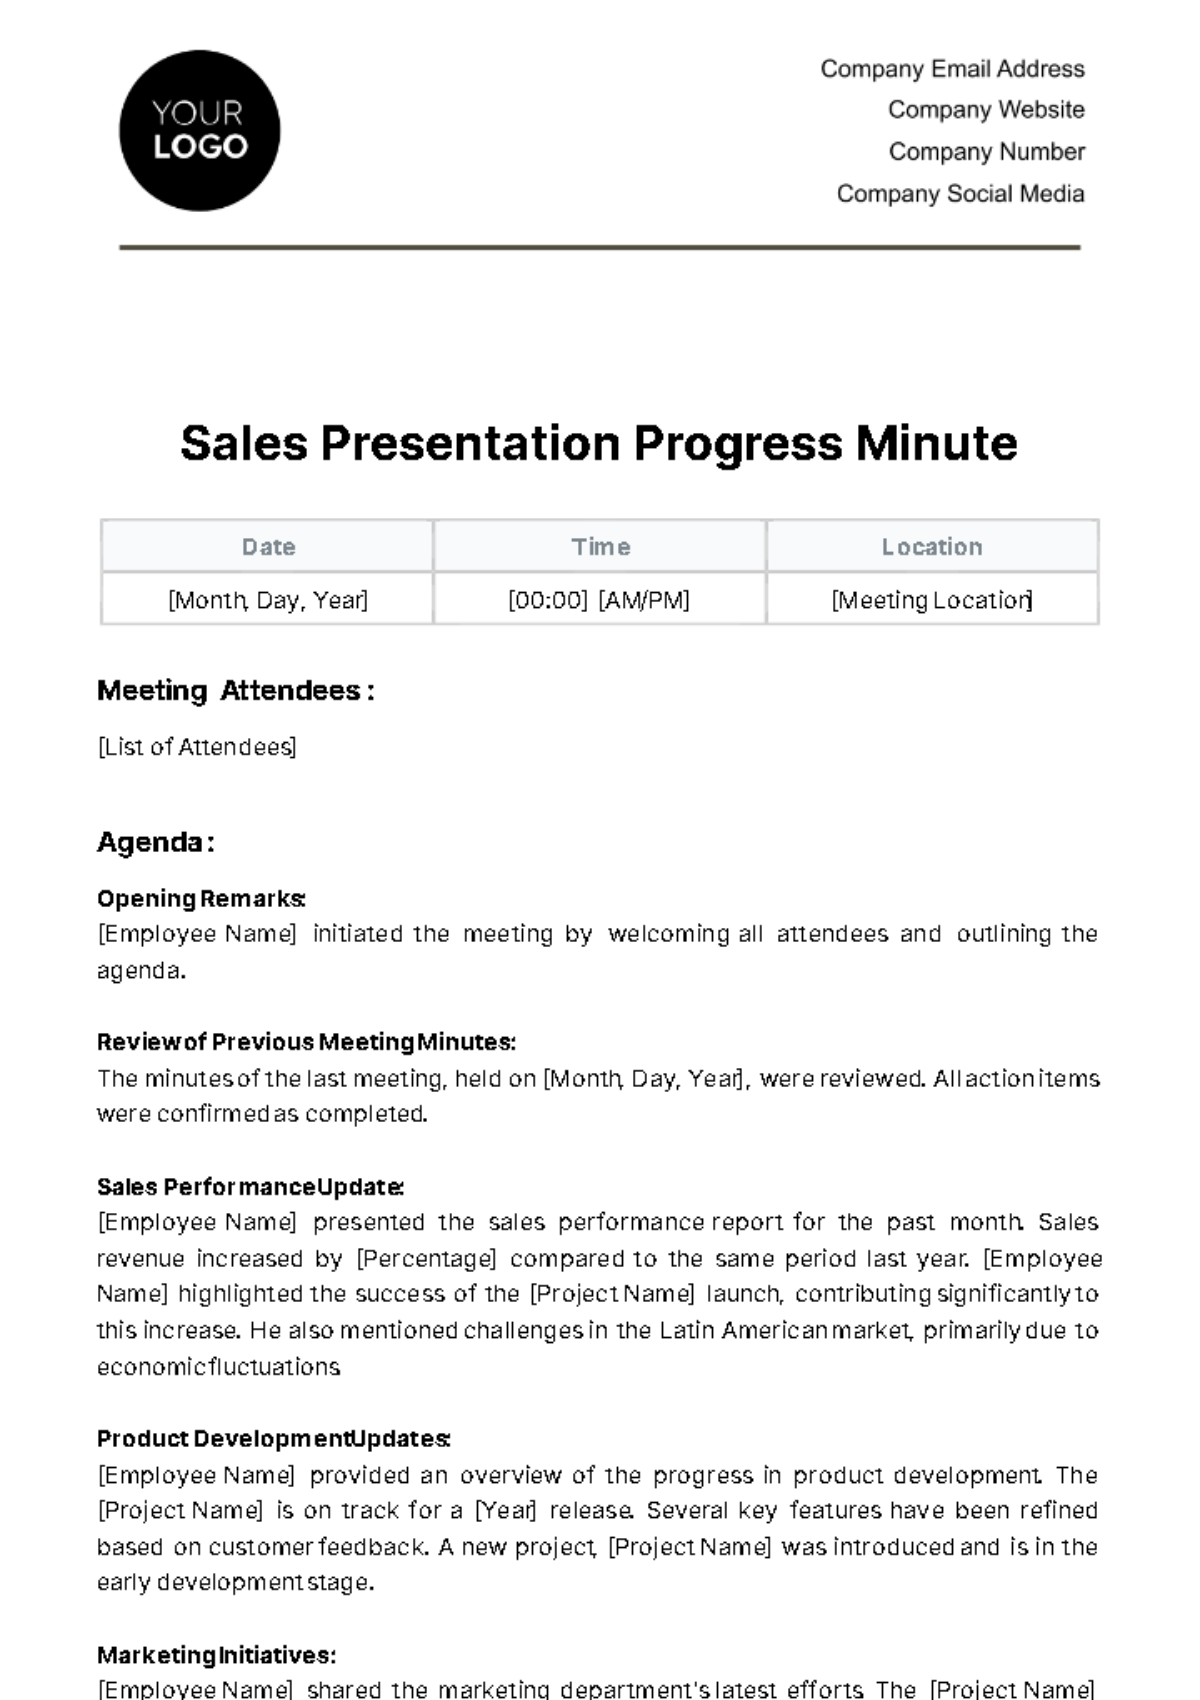 Free Sales Presentation Progress Minute Template